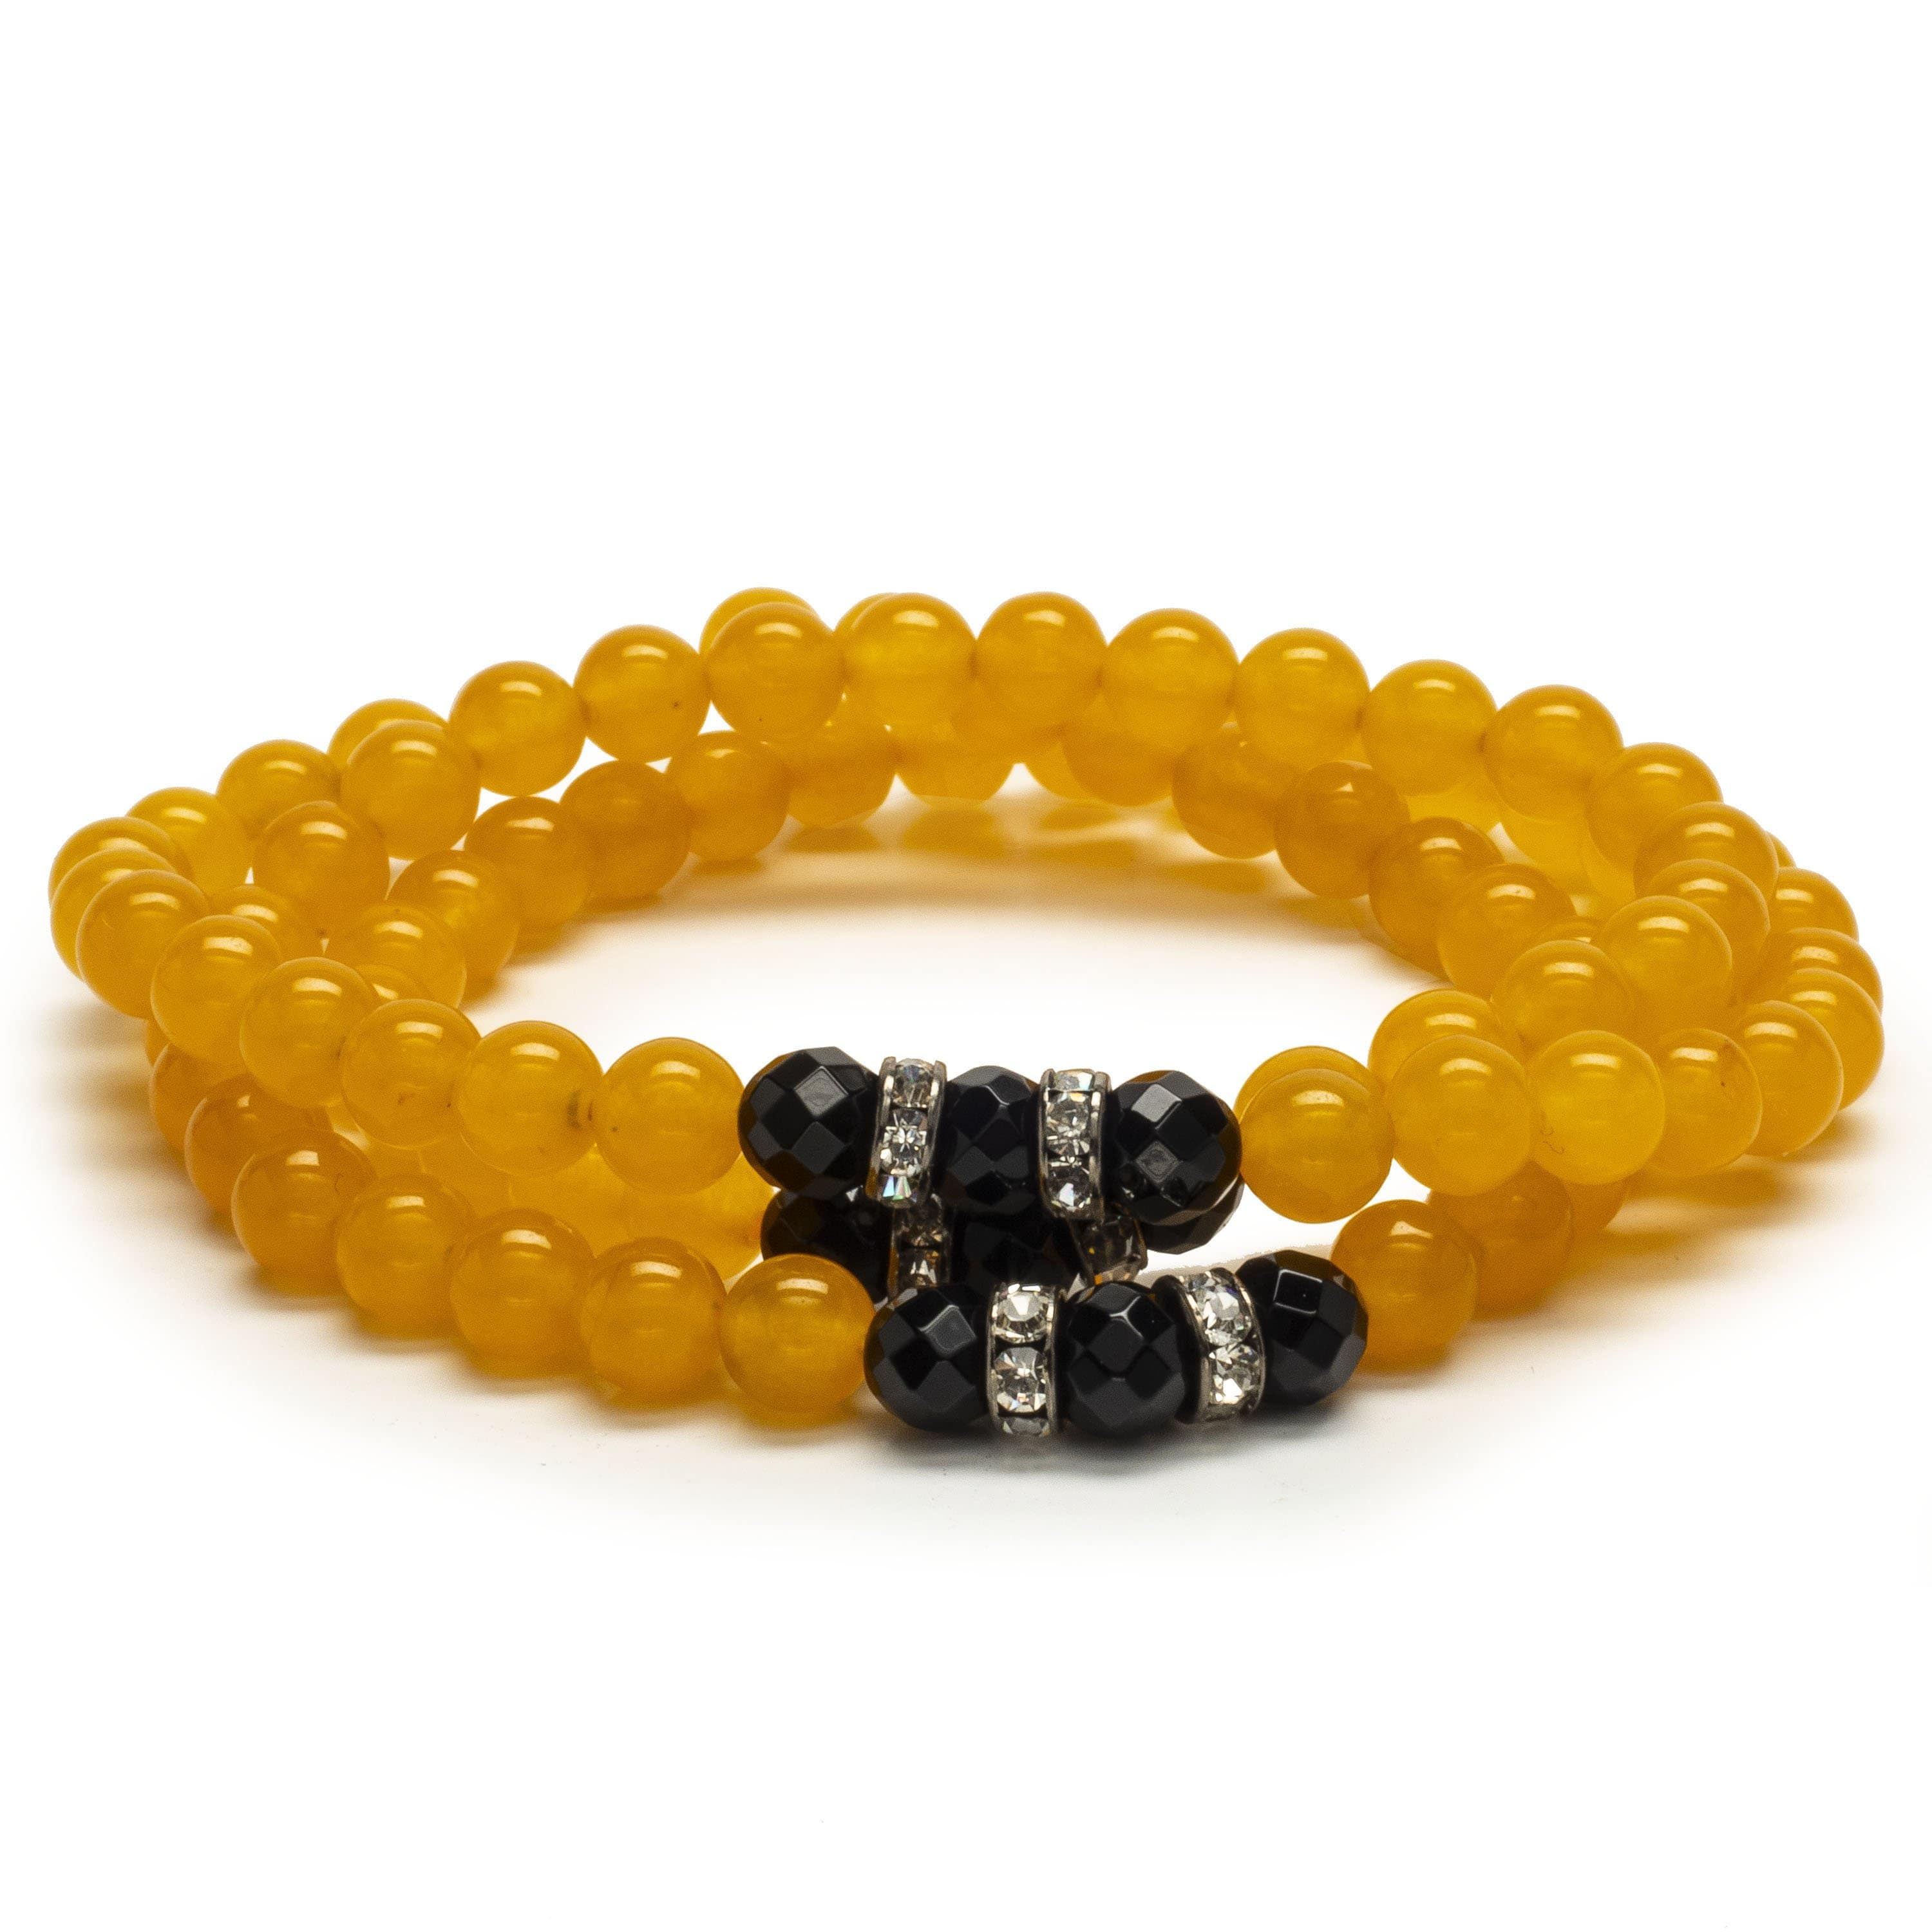 Set of two elastic bracelets - black and orange-yellow balls, flower motif